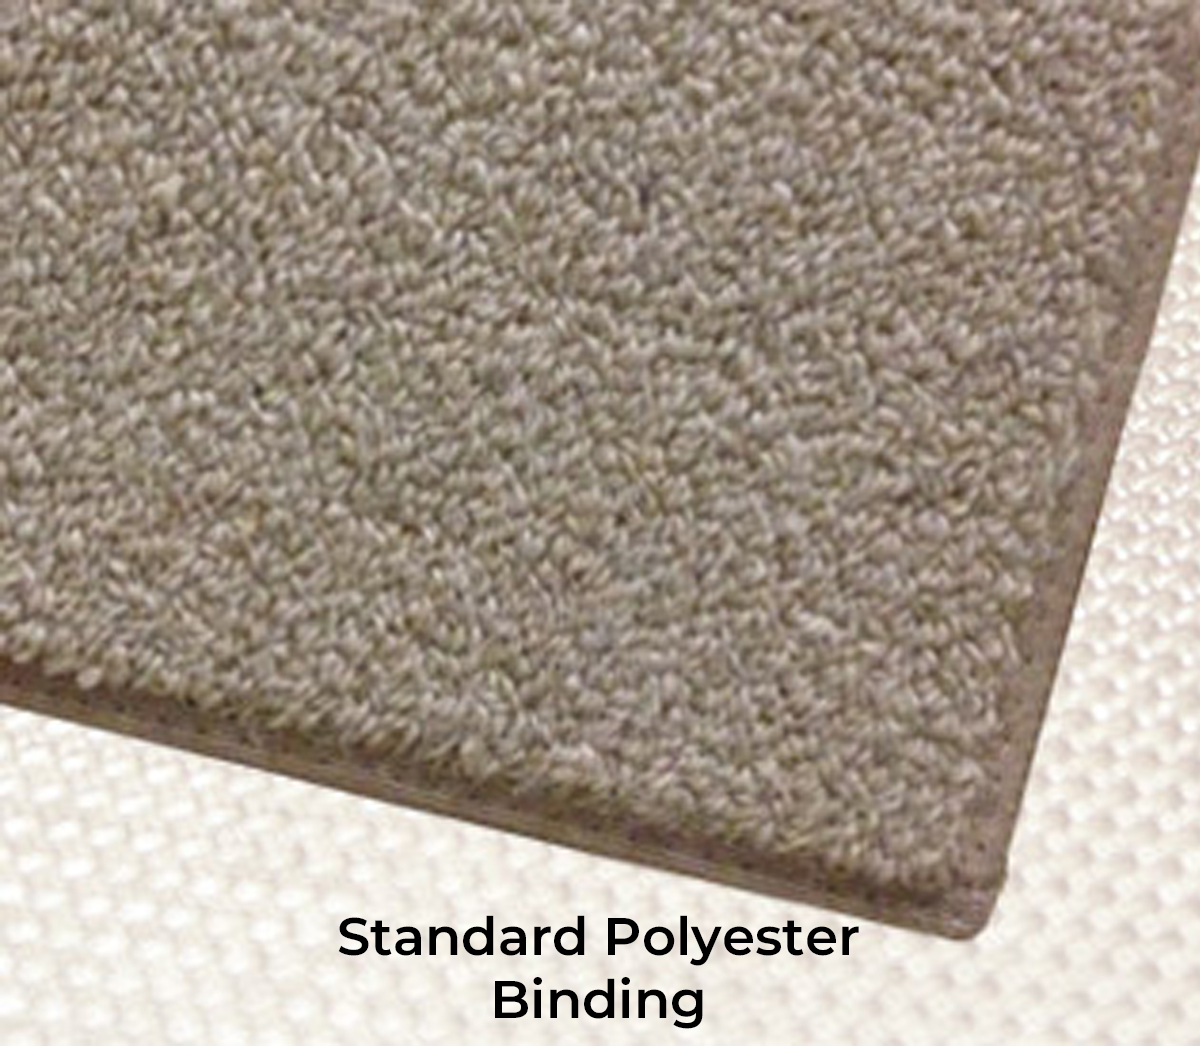 Standard Polyester